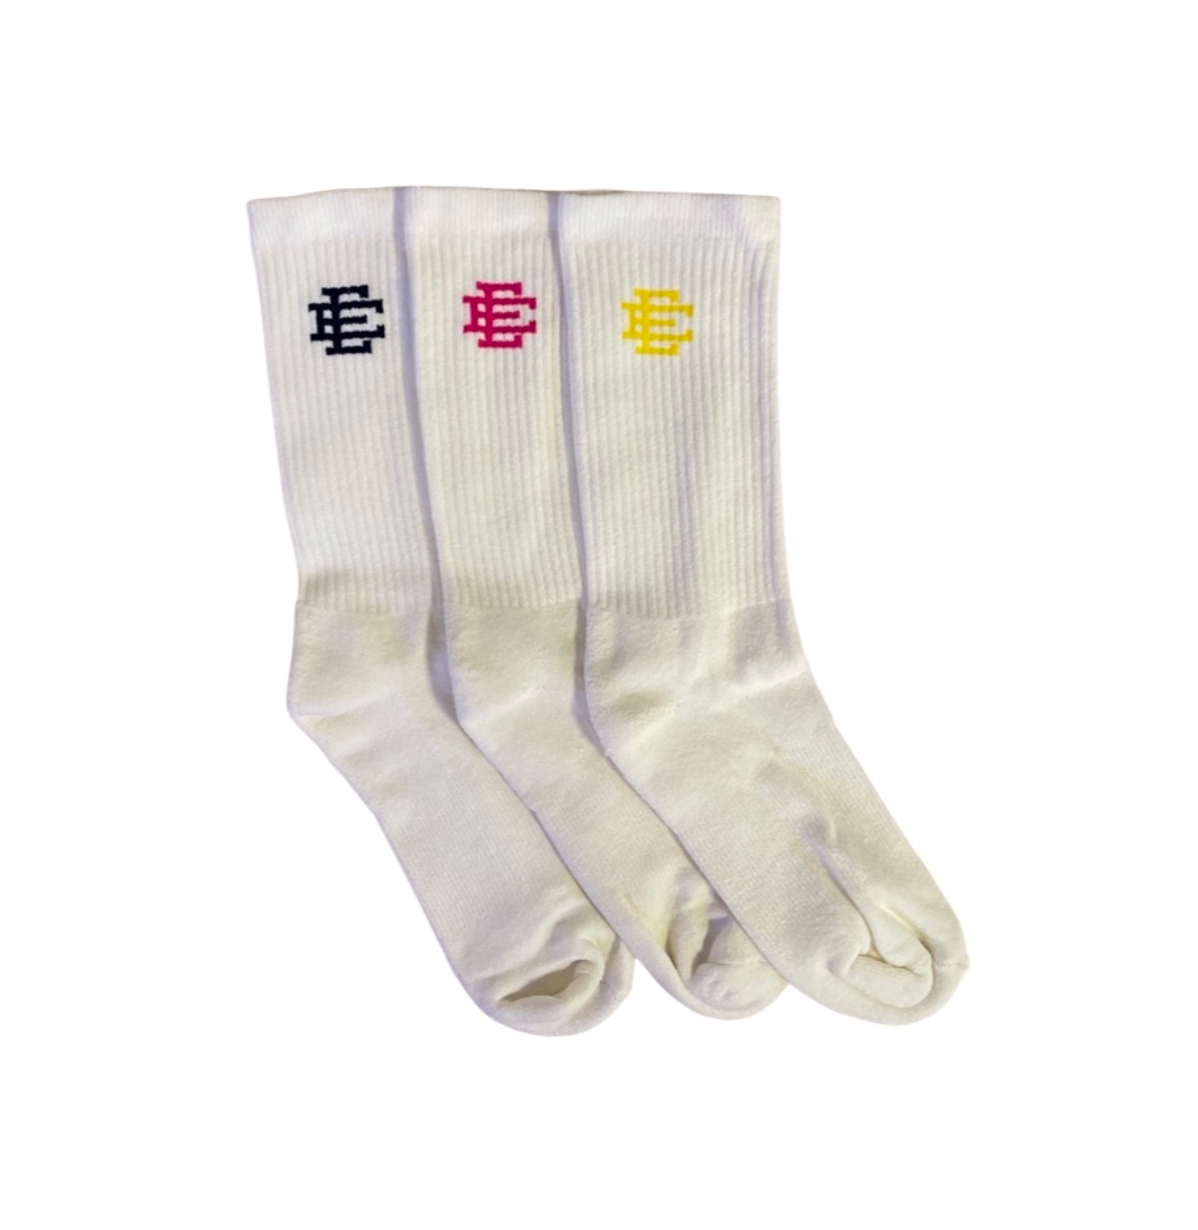 Eric Emanuel EE Socks 3 Pack Navy/Yellow/Pink